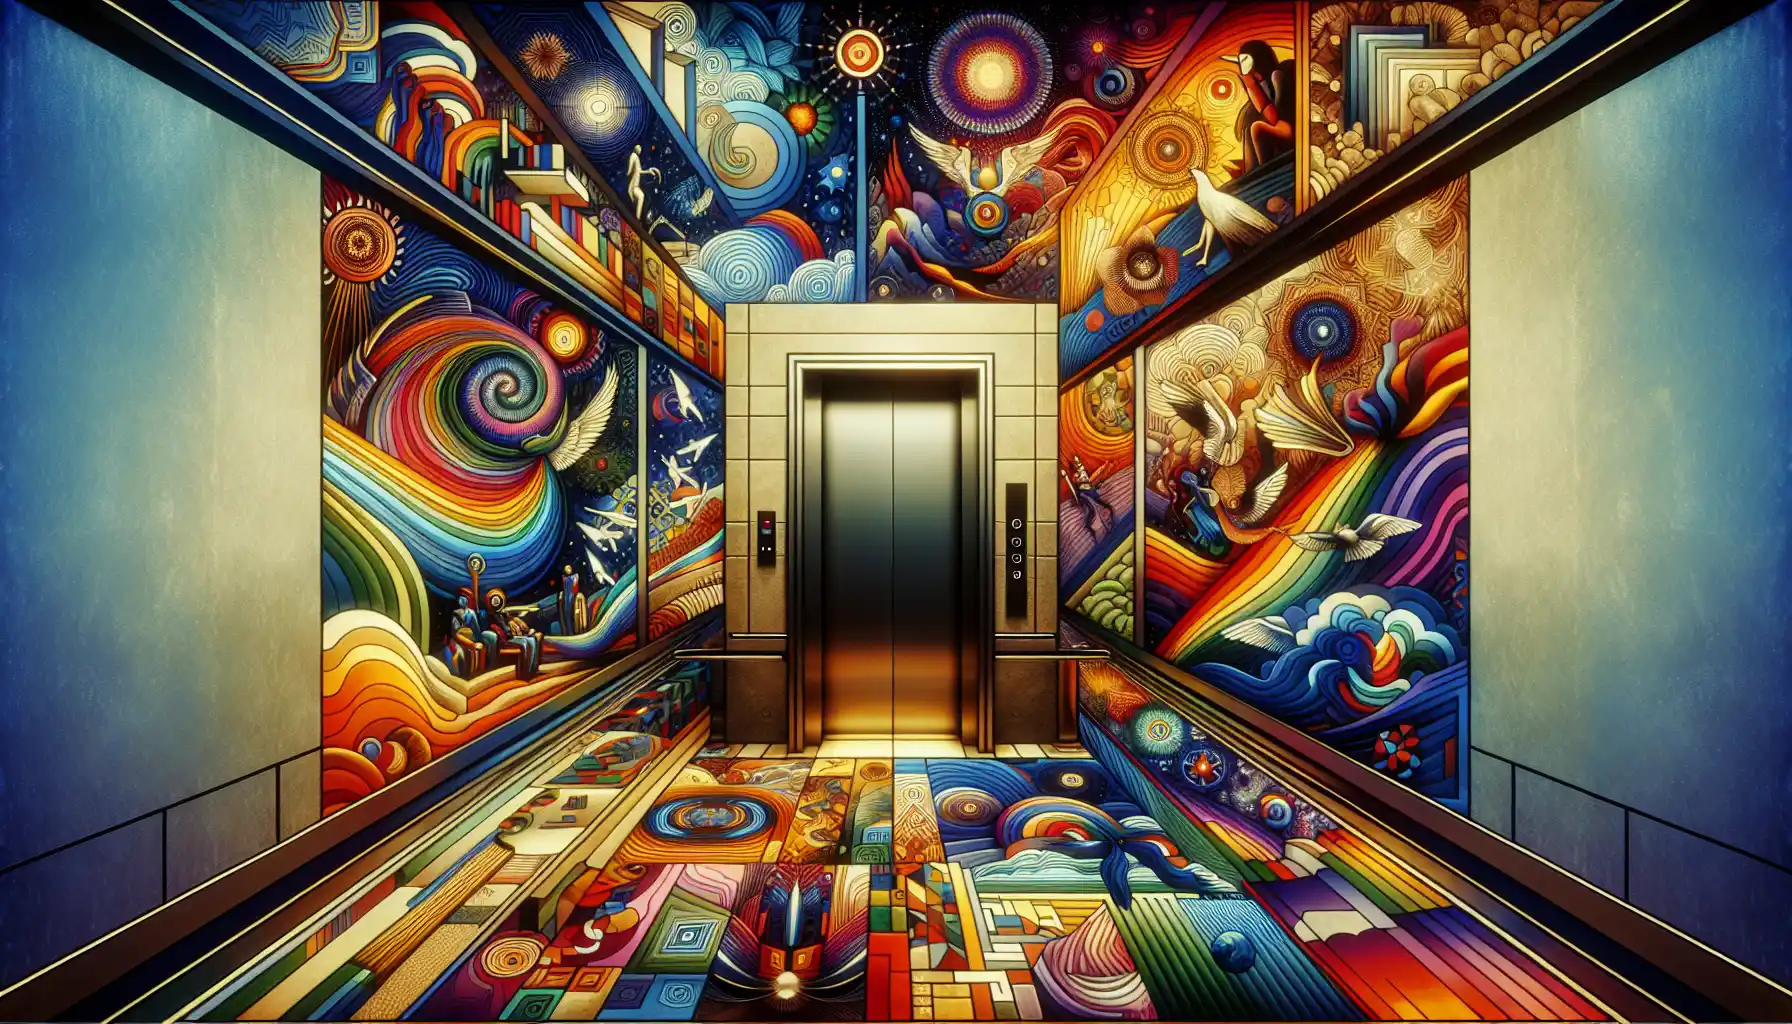 Common Elevator Dream Scenarios and Their Spiritual Meanings